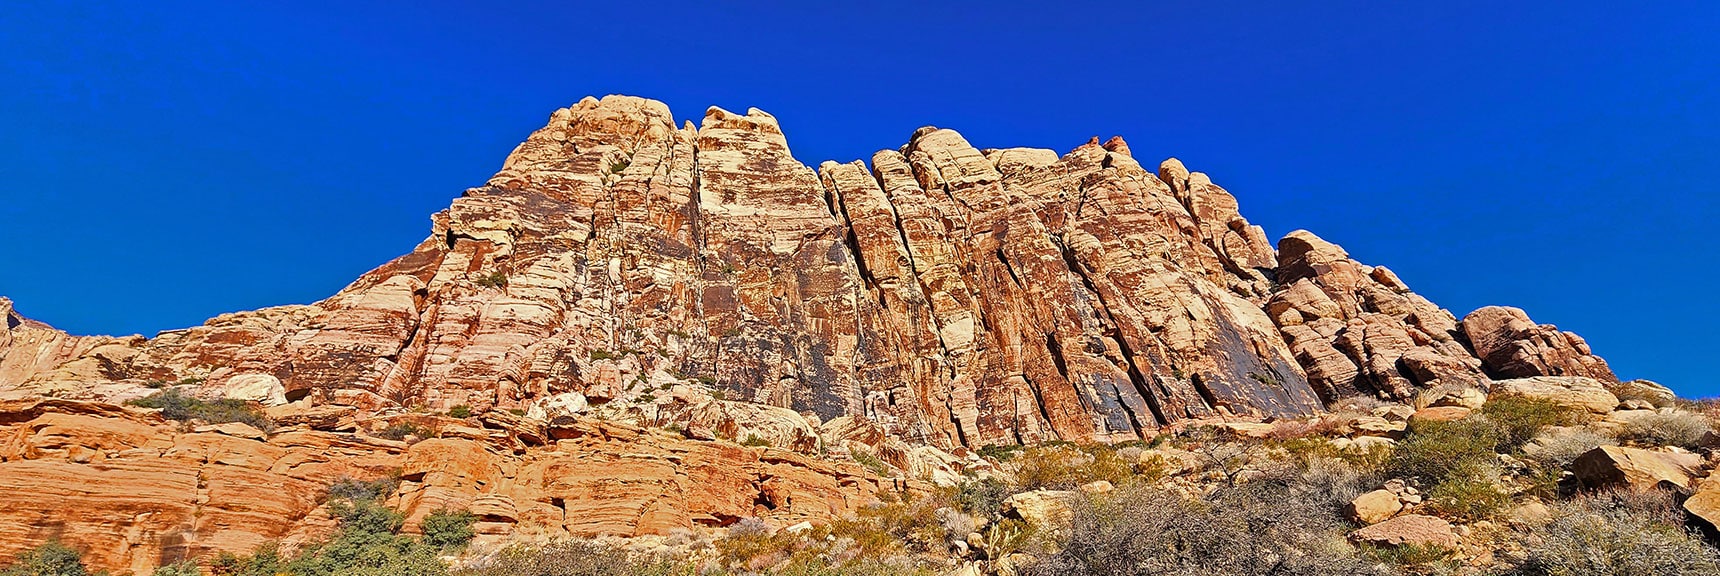 Bridge Mountain from Pine Creek Canyon | Rock Climber Observations | Pine Creek Canyon | Rainbow Mountain Wilderness, Nevada